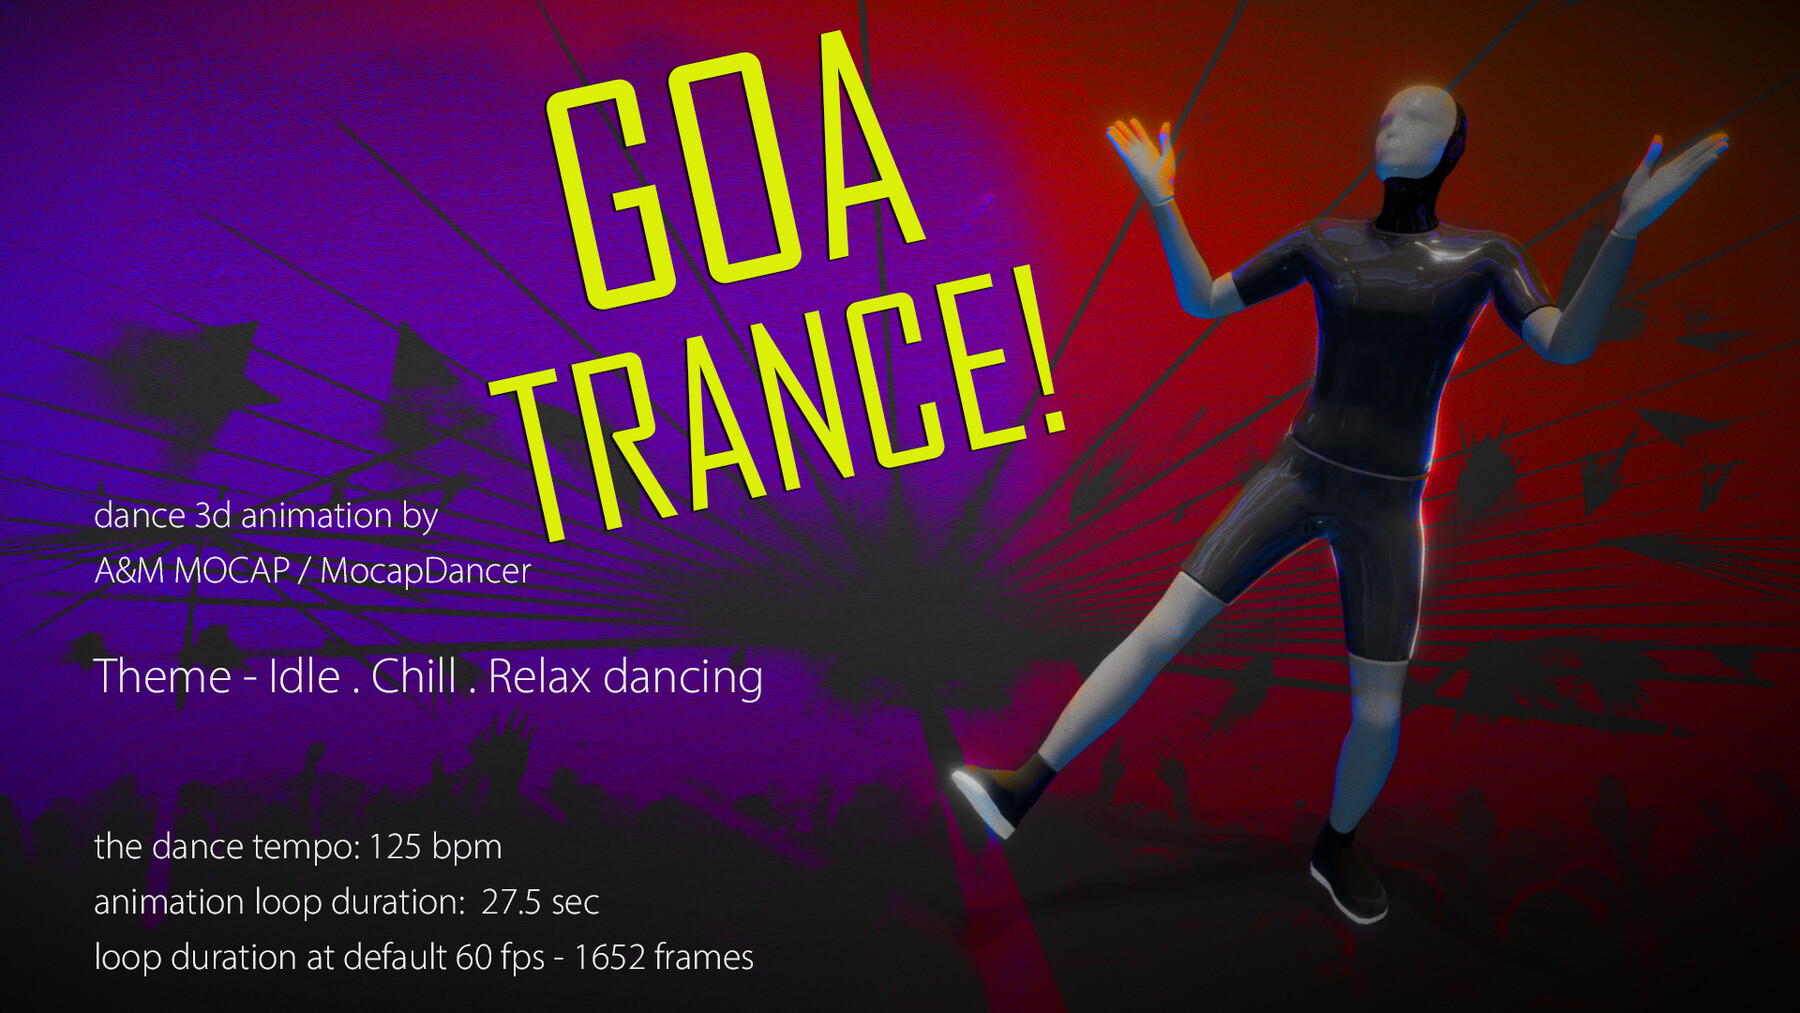 ArtStation - A&M: Goa Trance - dance animation ( 125bpm ) | Game Assets